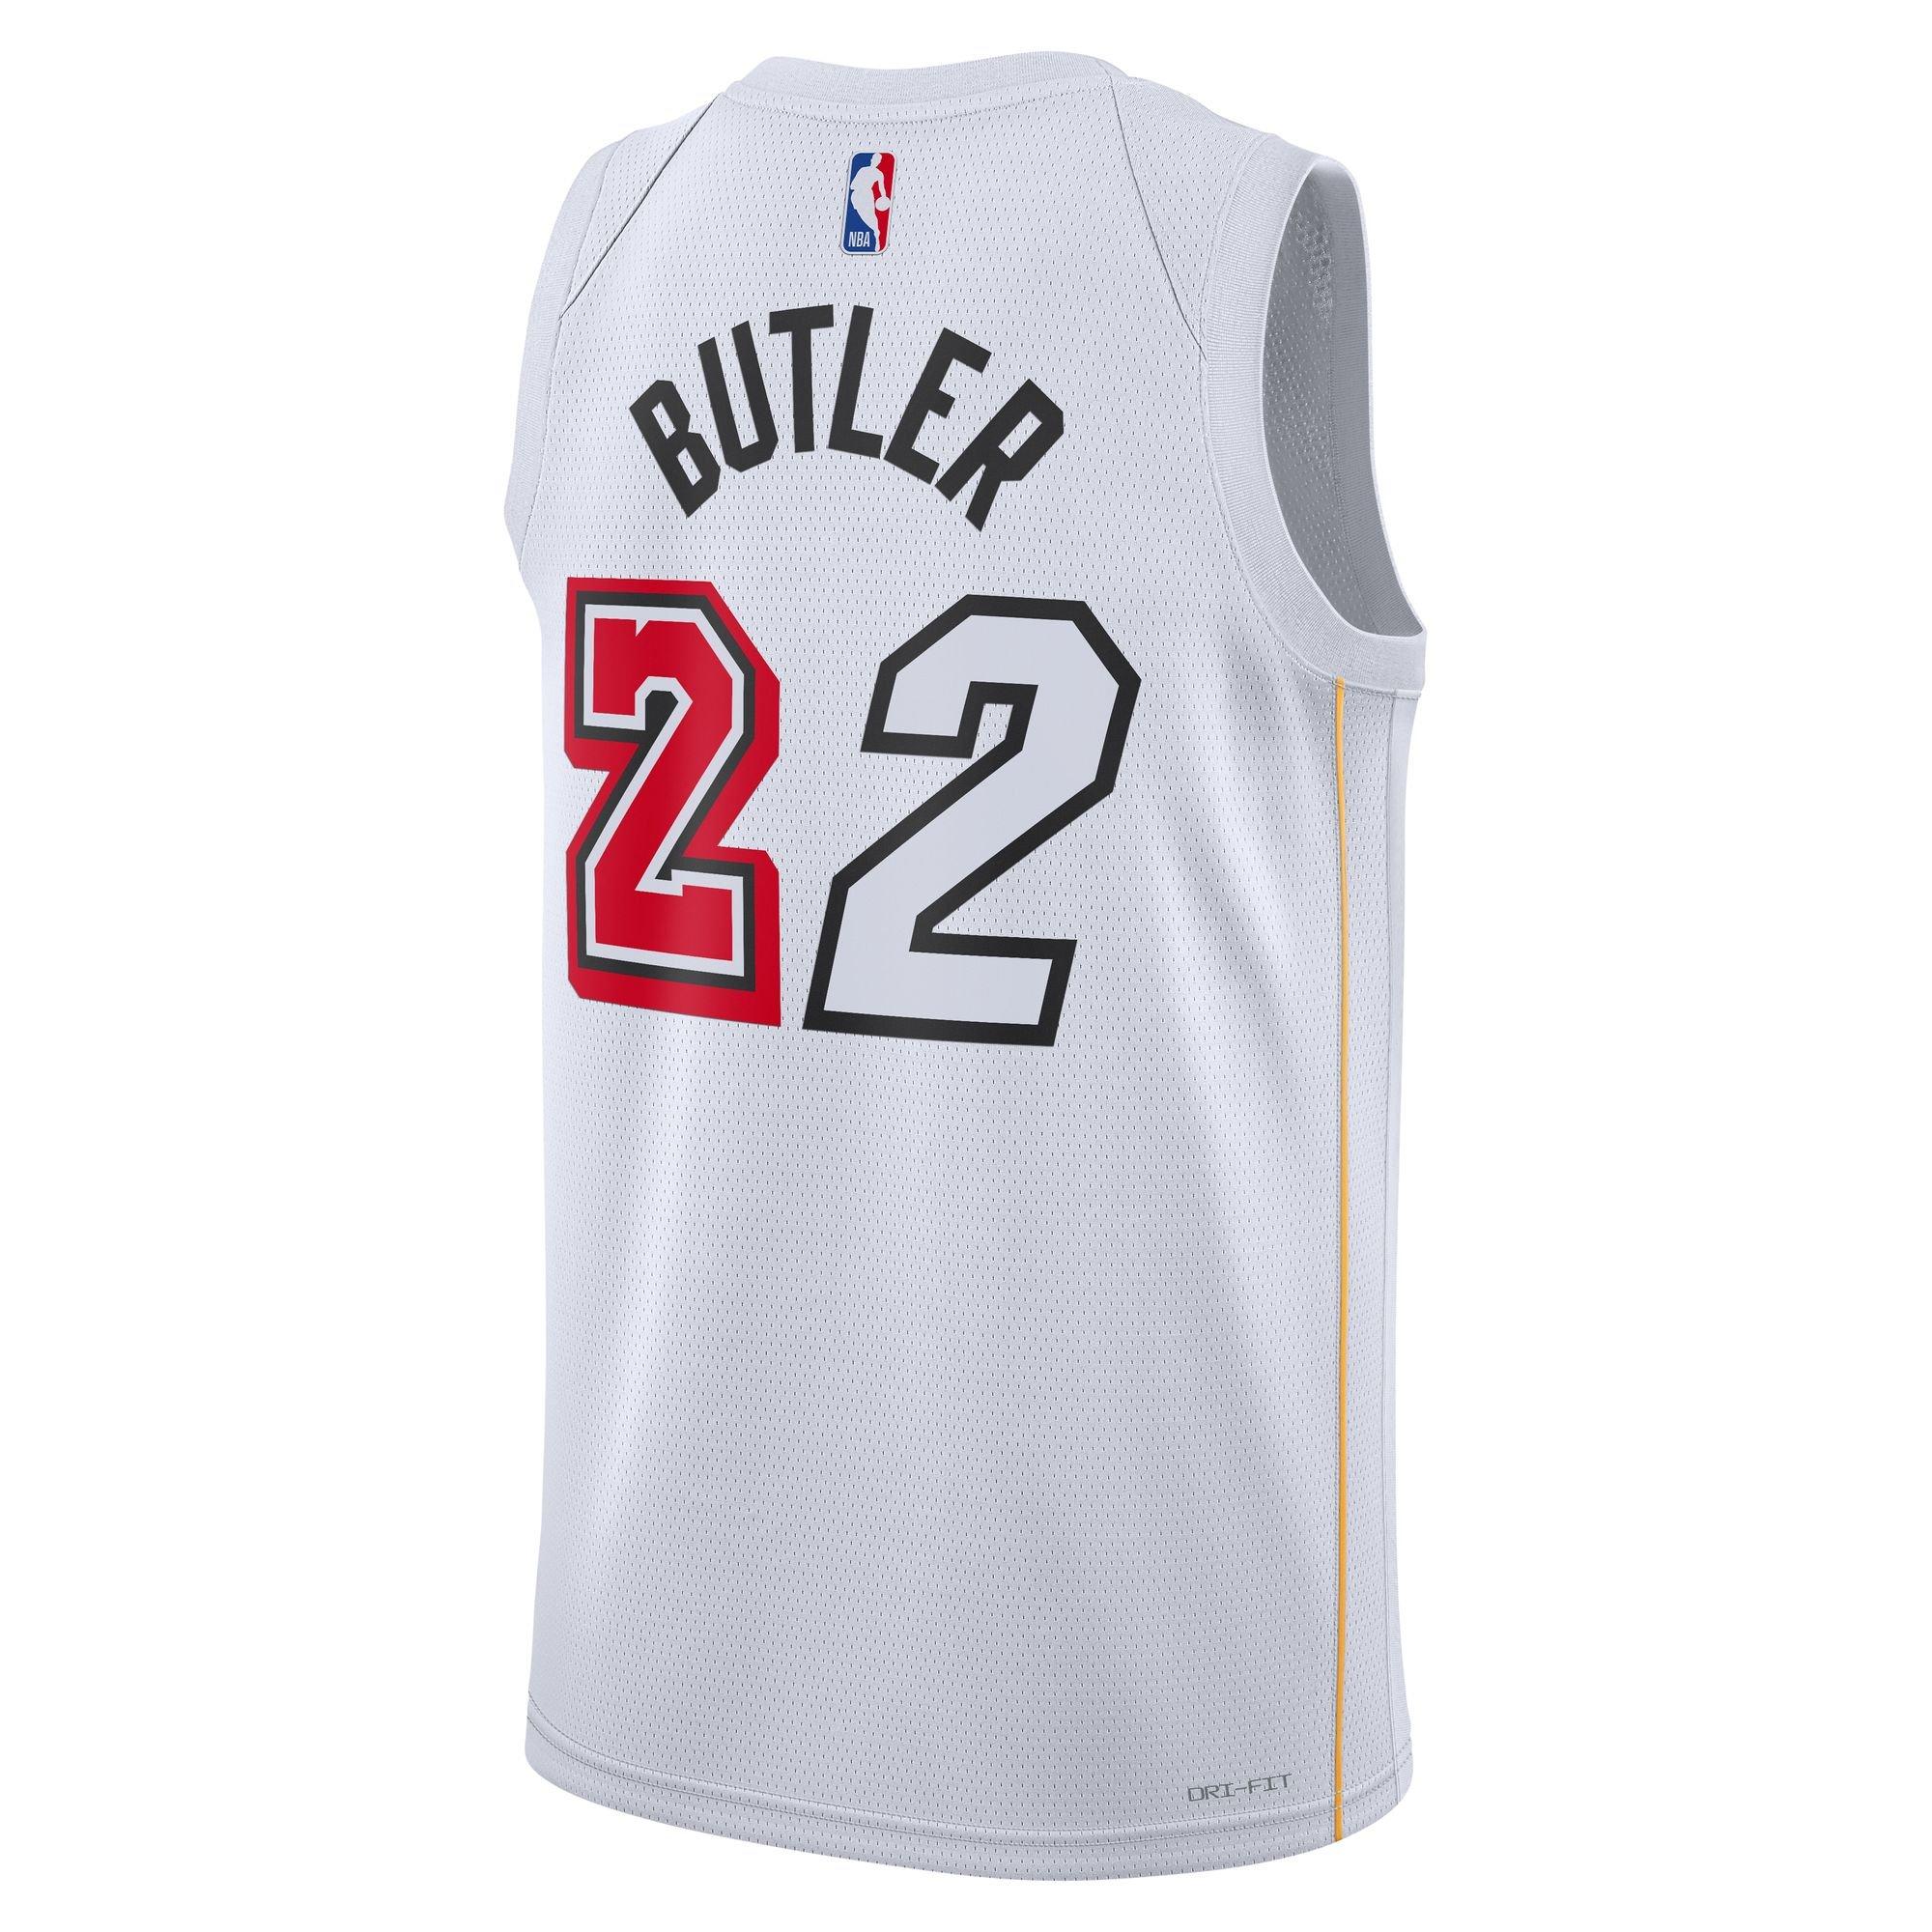 New Jimmy Butler Miami Heat Nike City Edition Swingman Jersey Men's XL  2020 NBA